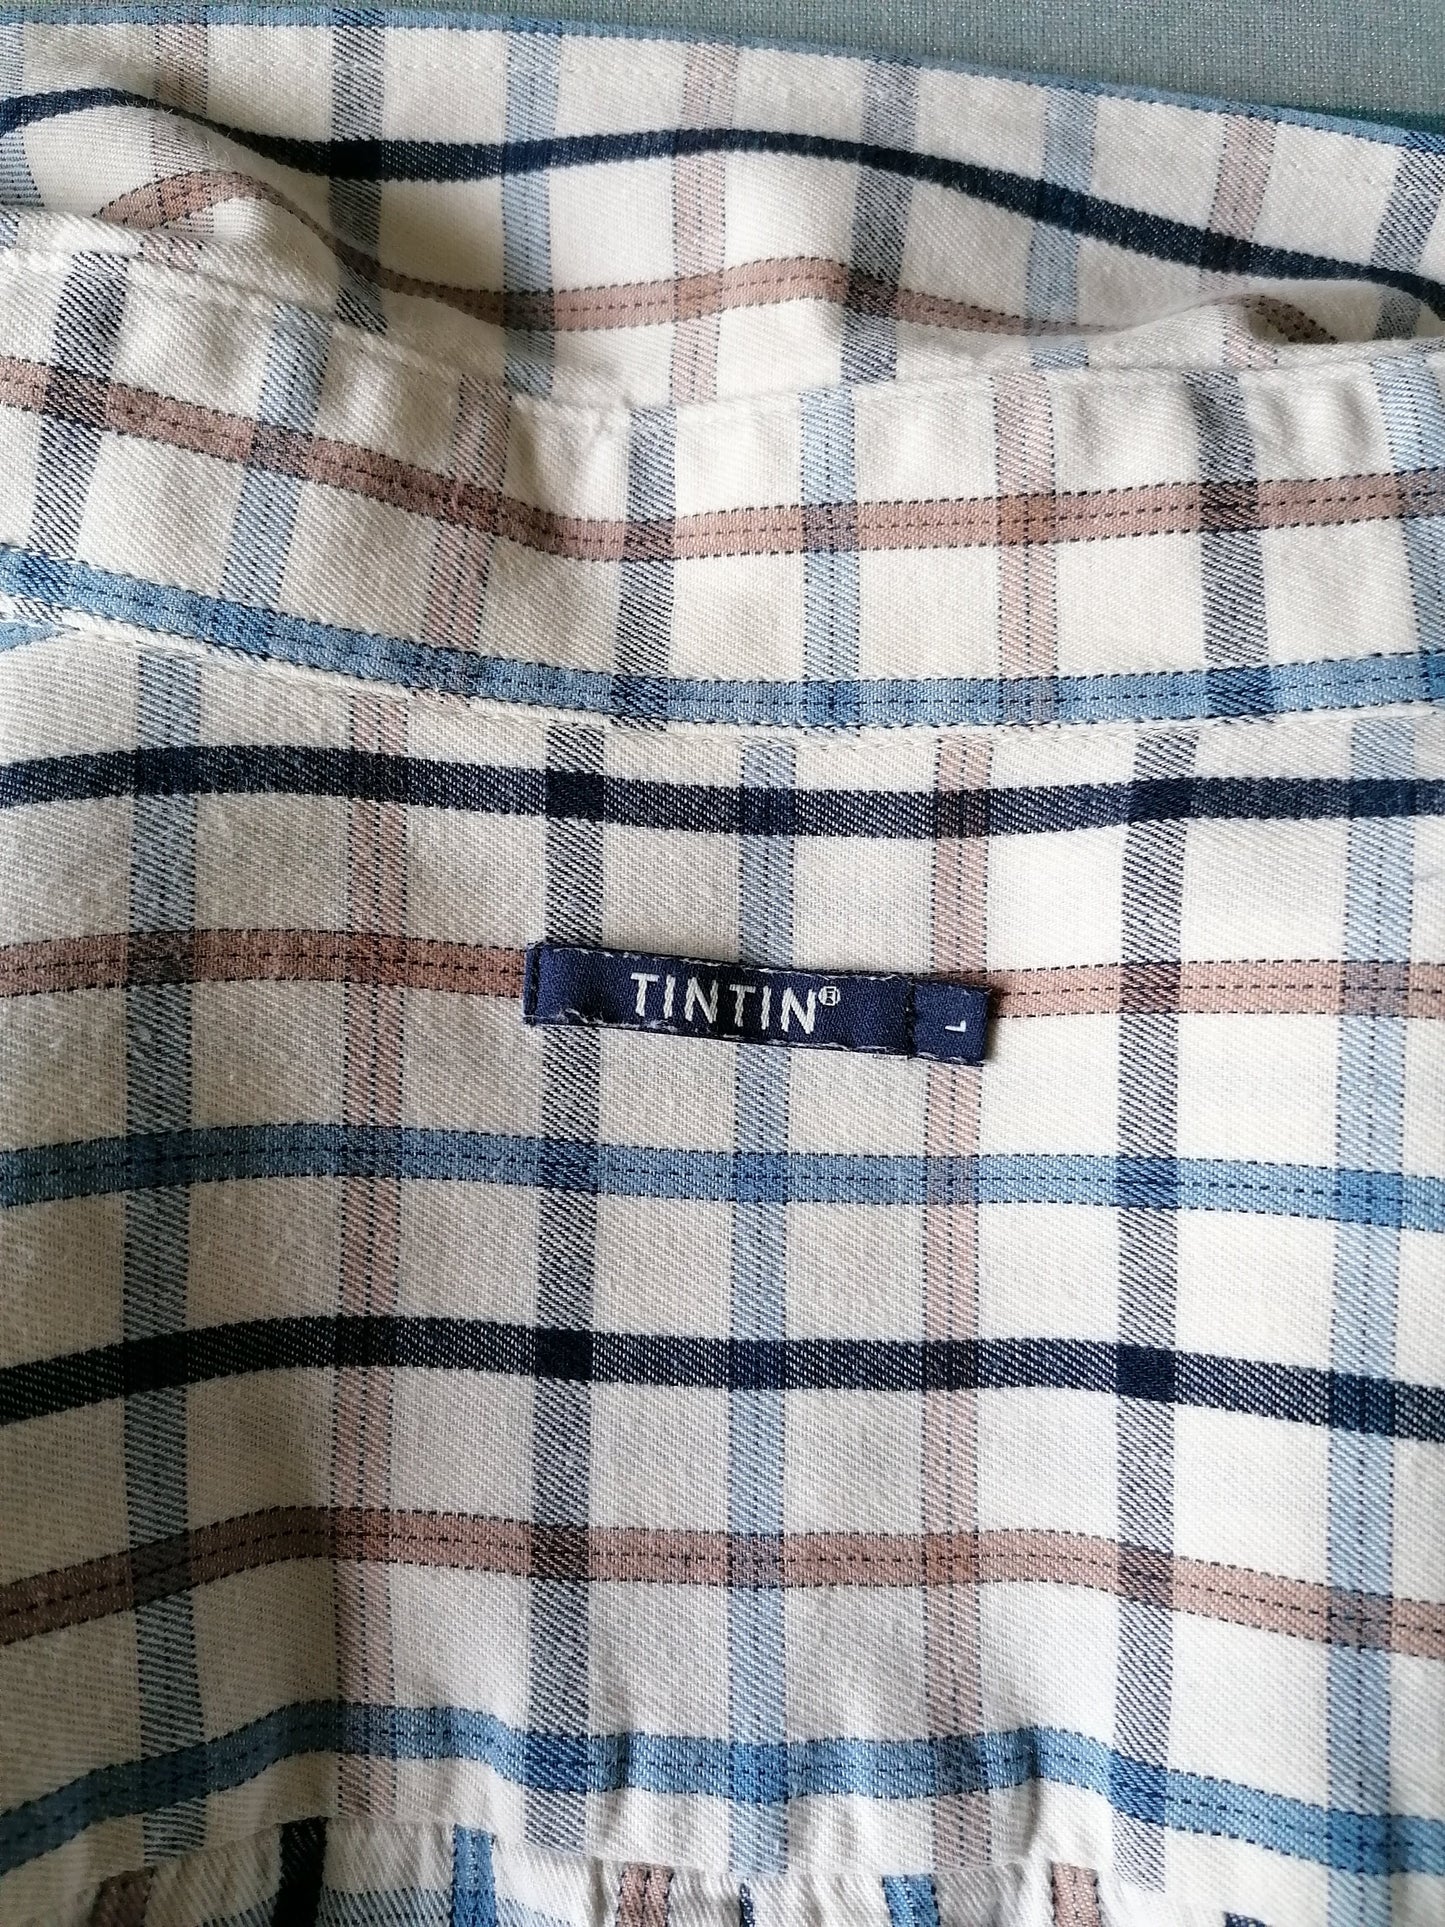 Camisa de tintina vintage (tintin). Beige azul marrón. Talla L.